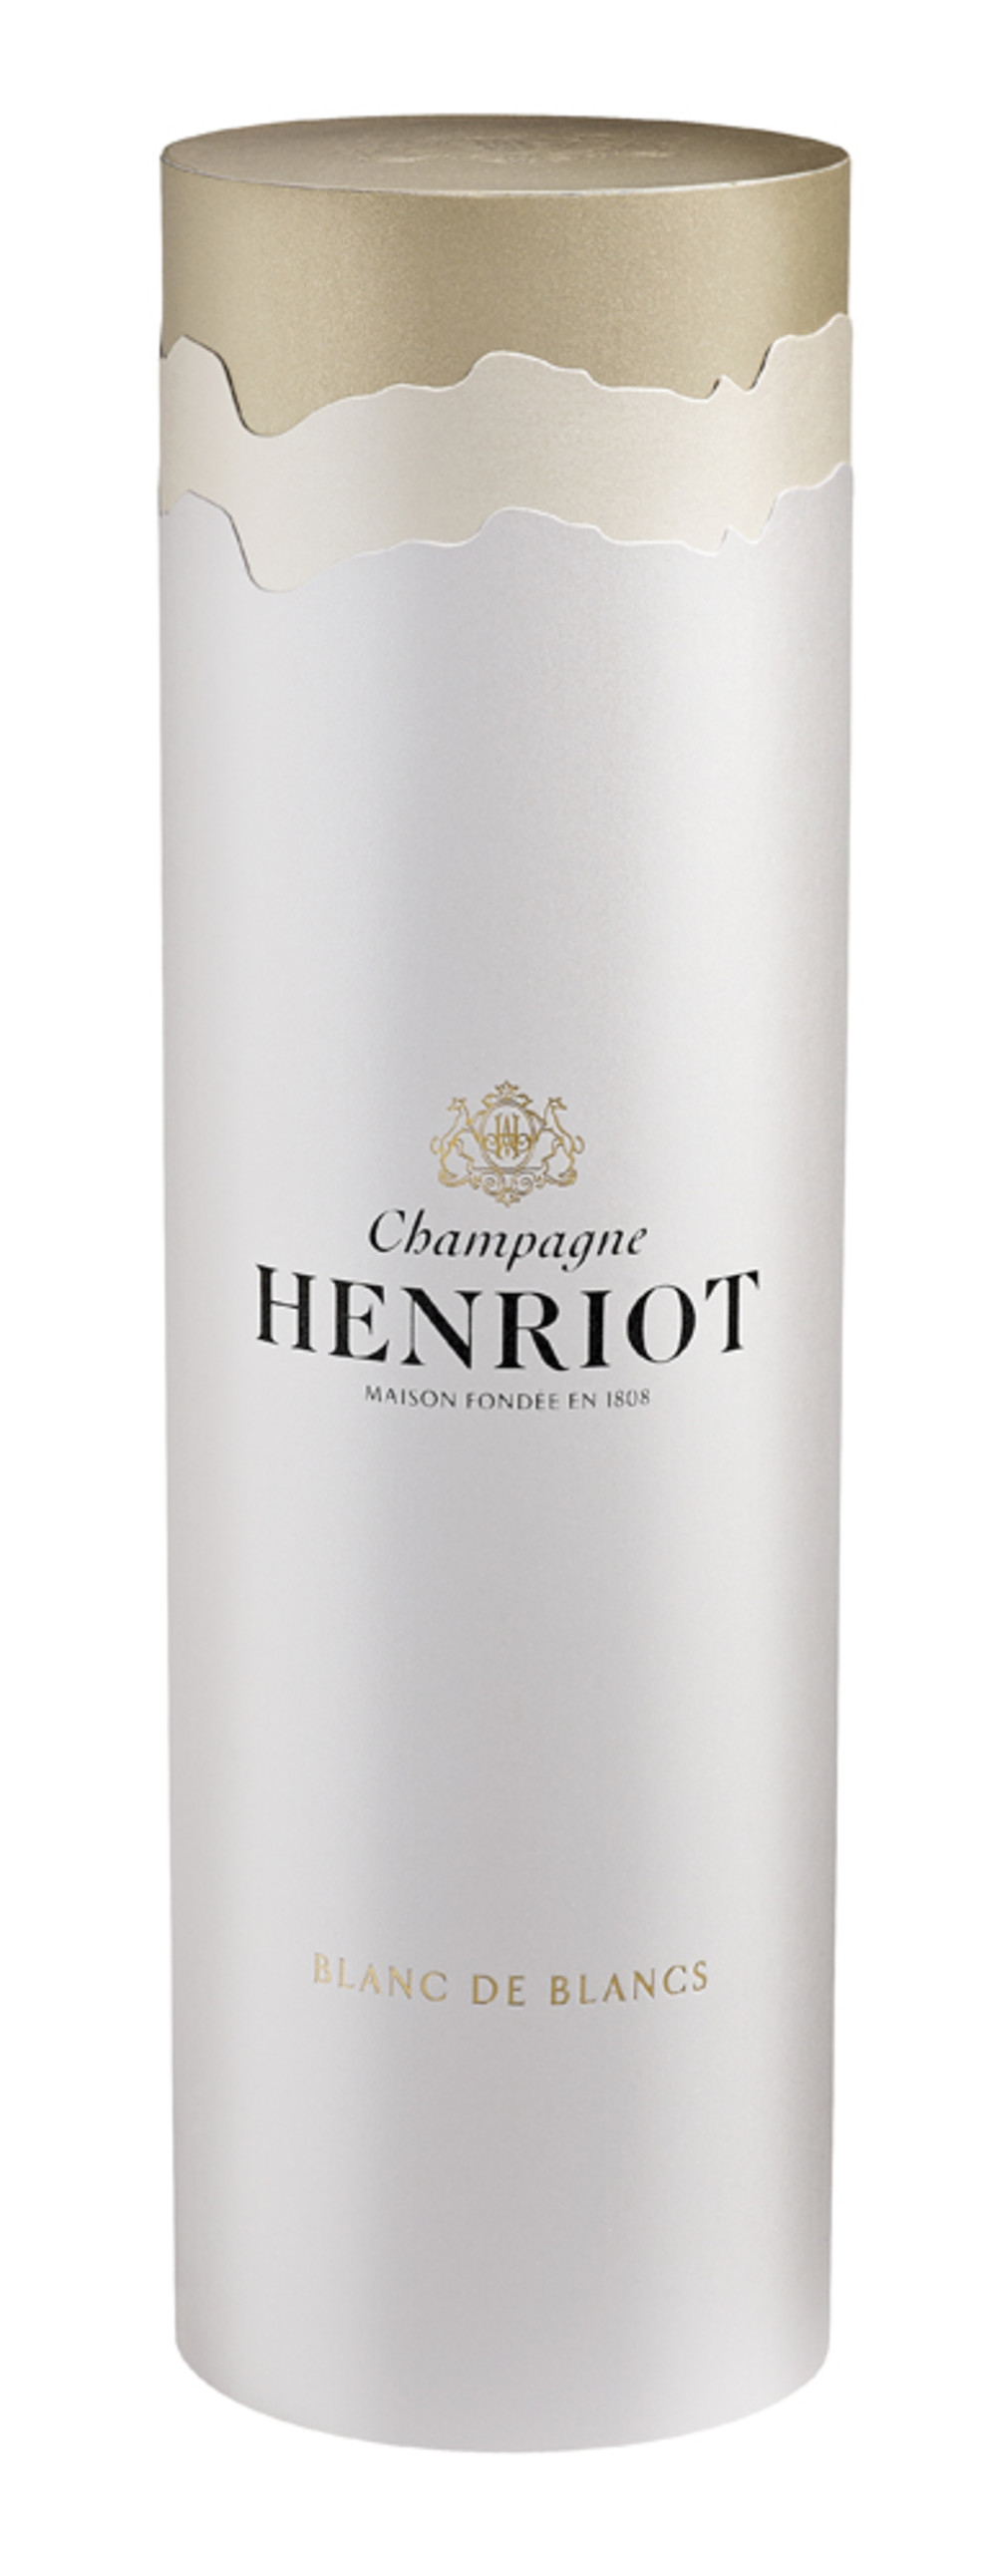 Champagne HENRIOT_Coffret Blanc de Blancs.jpg